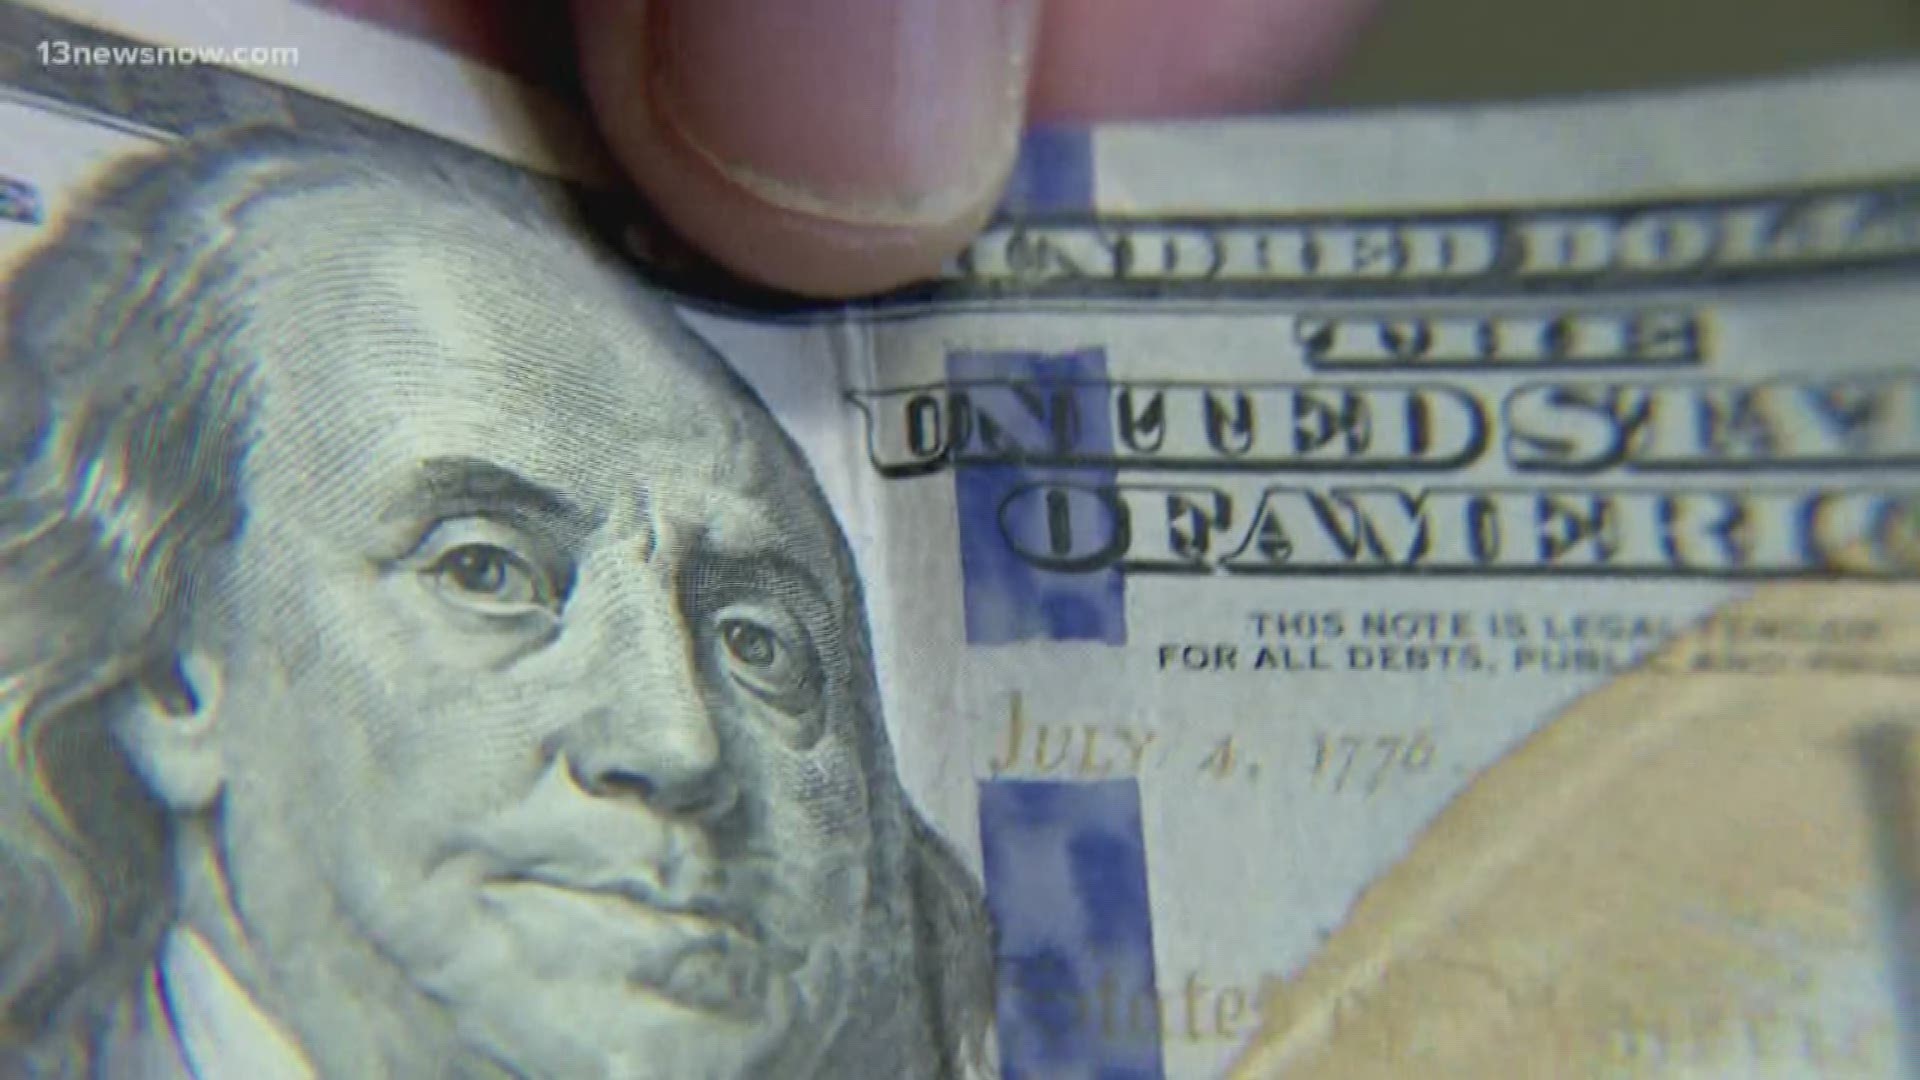 Warning: Fake $100 bills being passed around Caldwell County